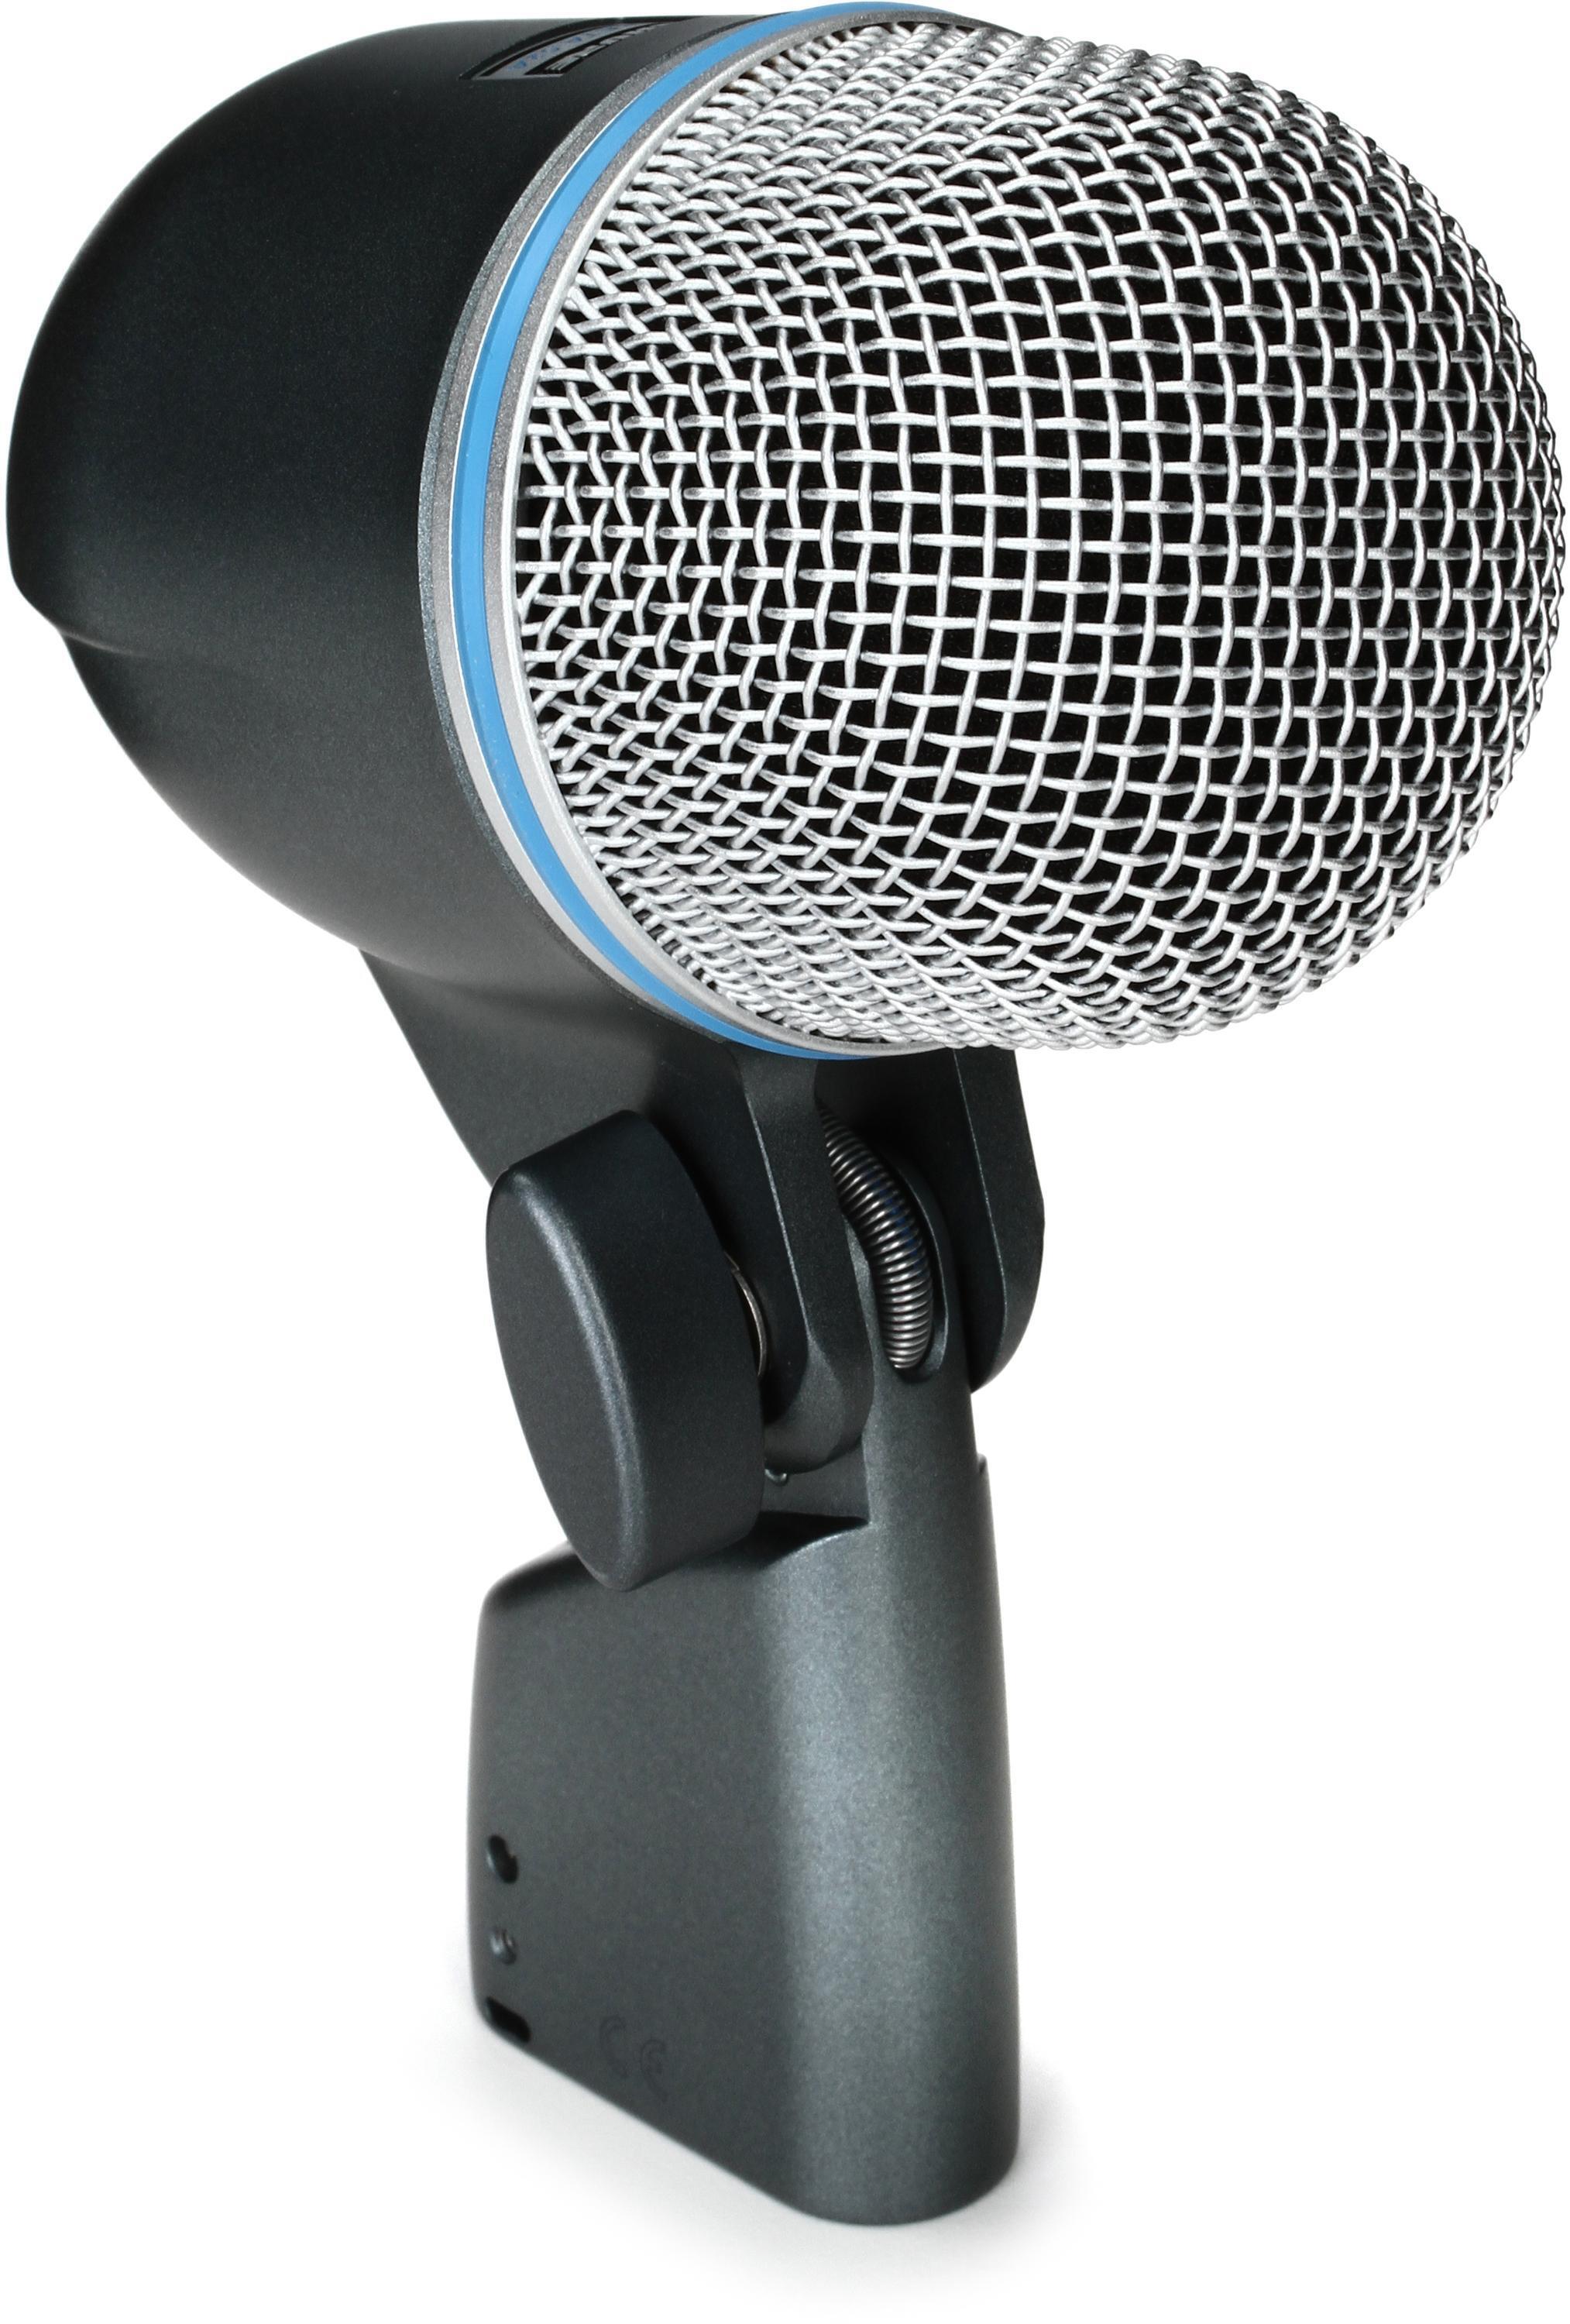 Bundled Item: Shure Beta 52A Supercardioid Dynamic Kick Drum Microphone